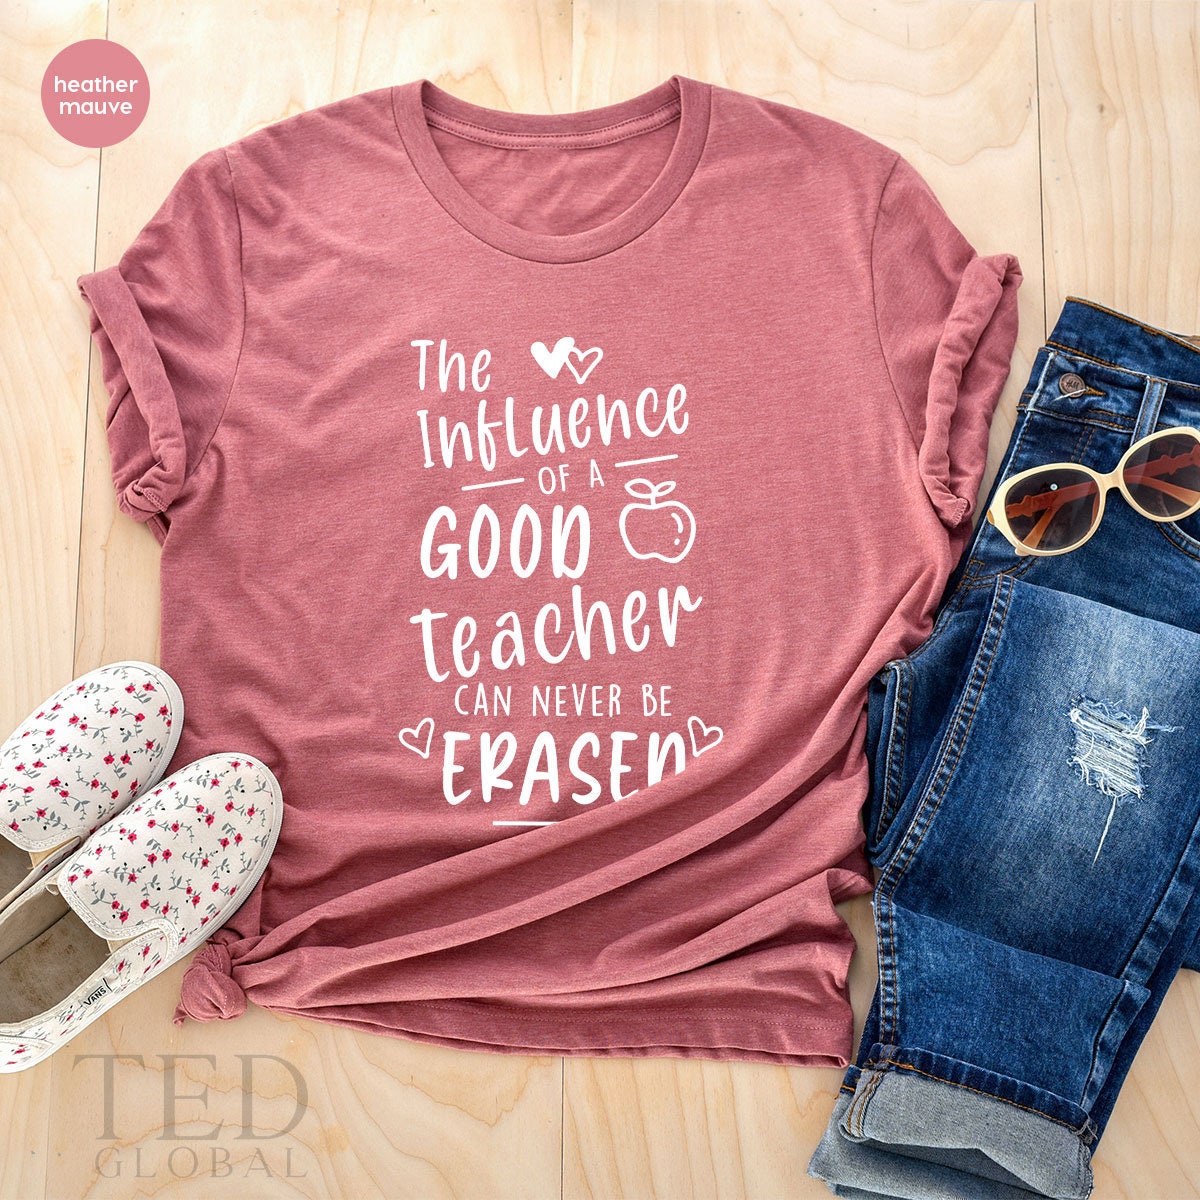 Good Teacher Can Never Be Erased Shirt, Funny Teacher Shirt, Teacher TShirt, Inspirational Shirt, Teacher Gift, Kindergarten Teacher Shirt - Fastdeliverytees.com